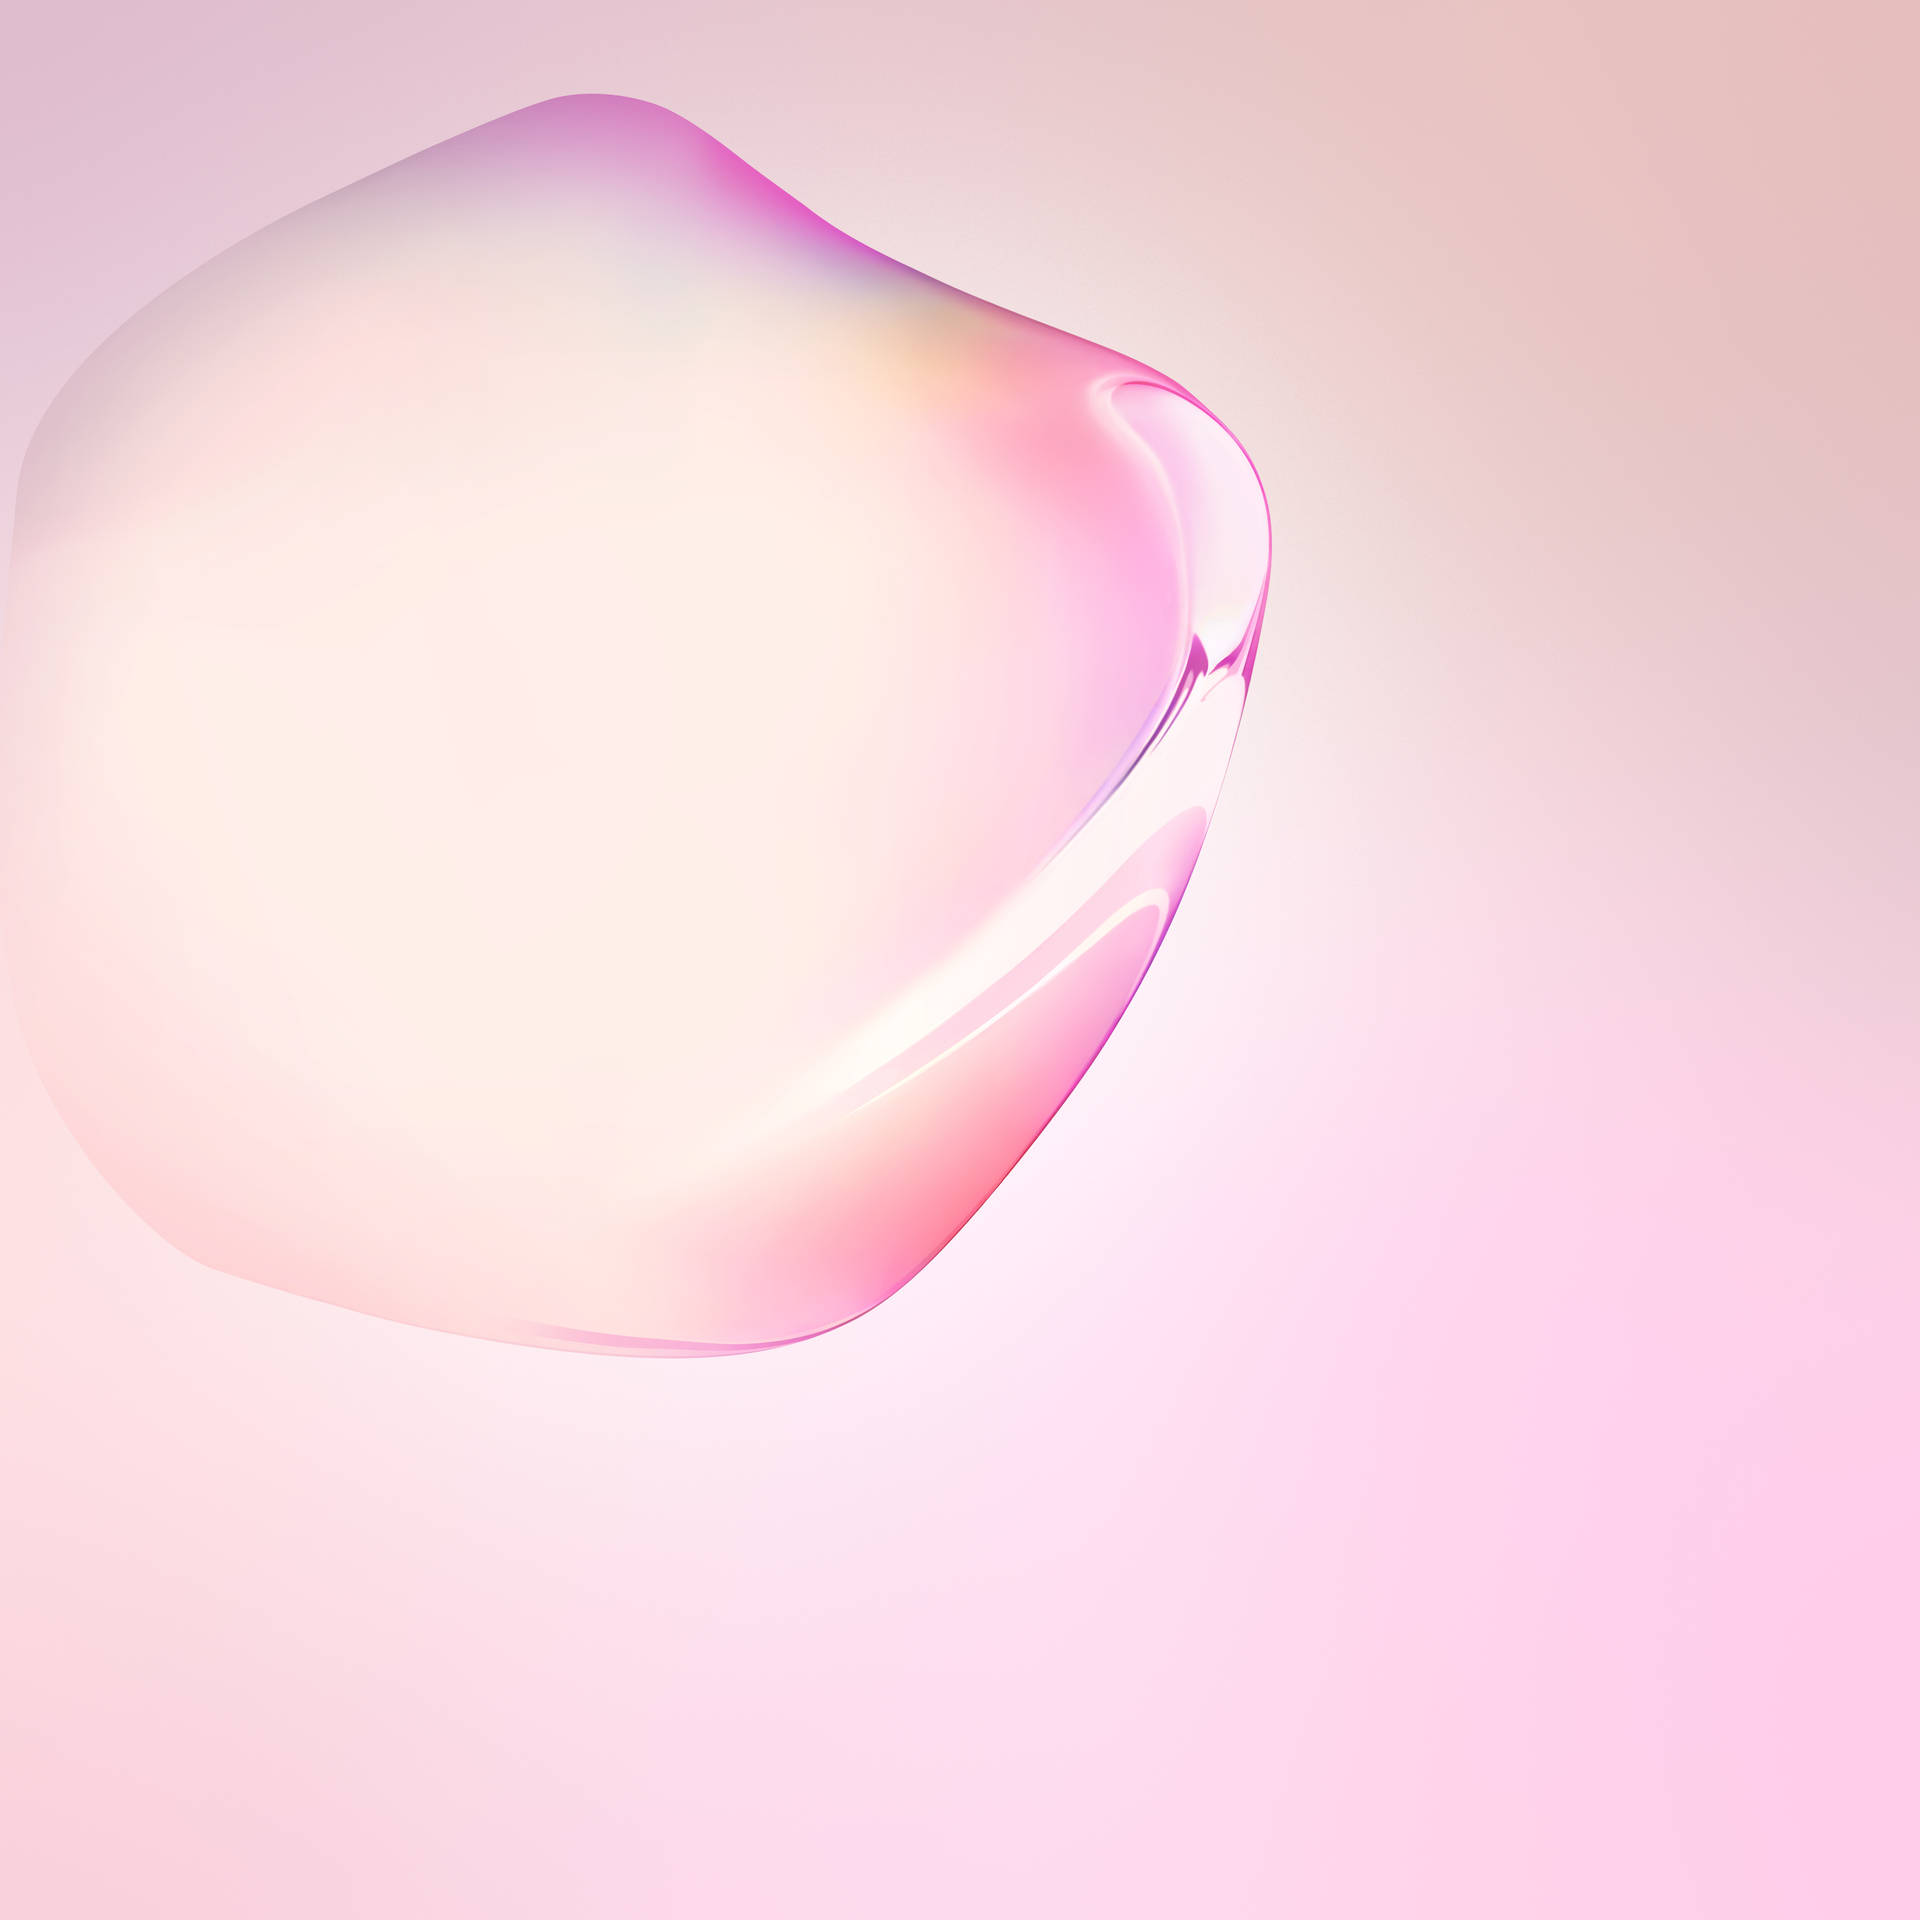 4d Ultra Hd Soft Pink Bubble